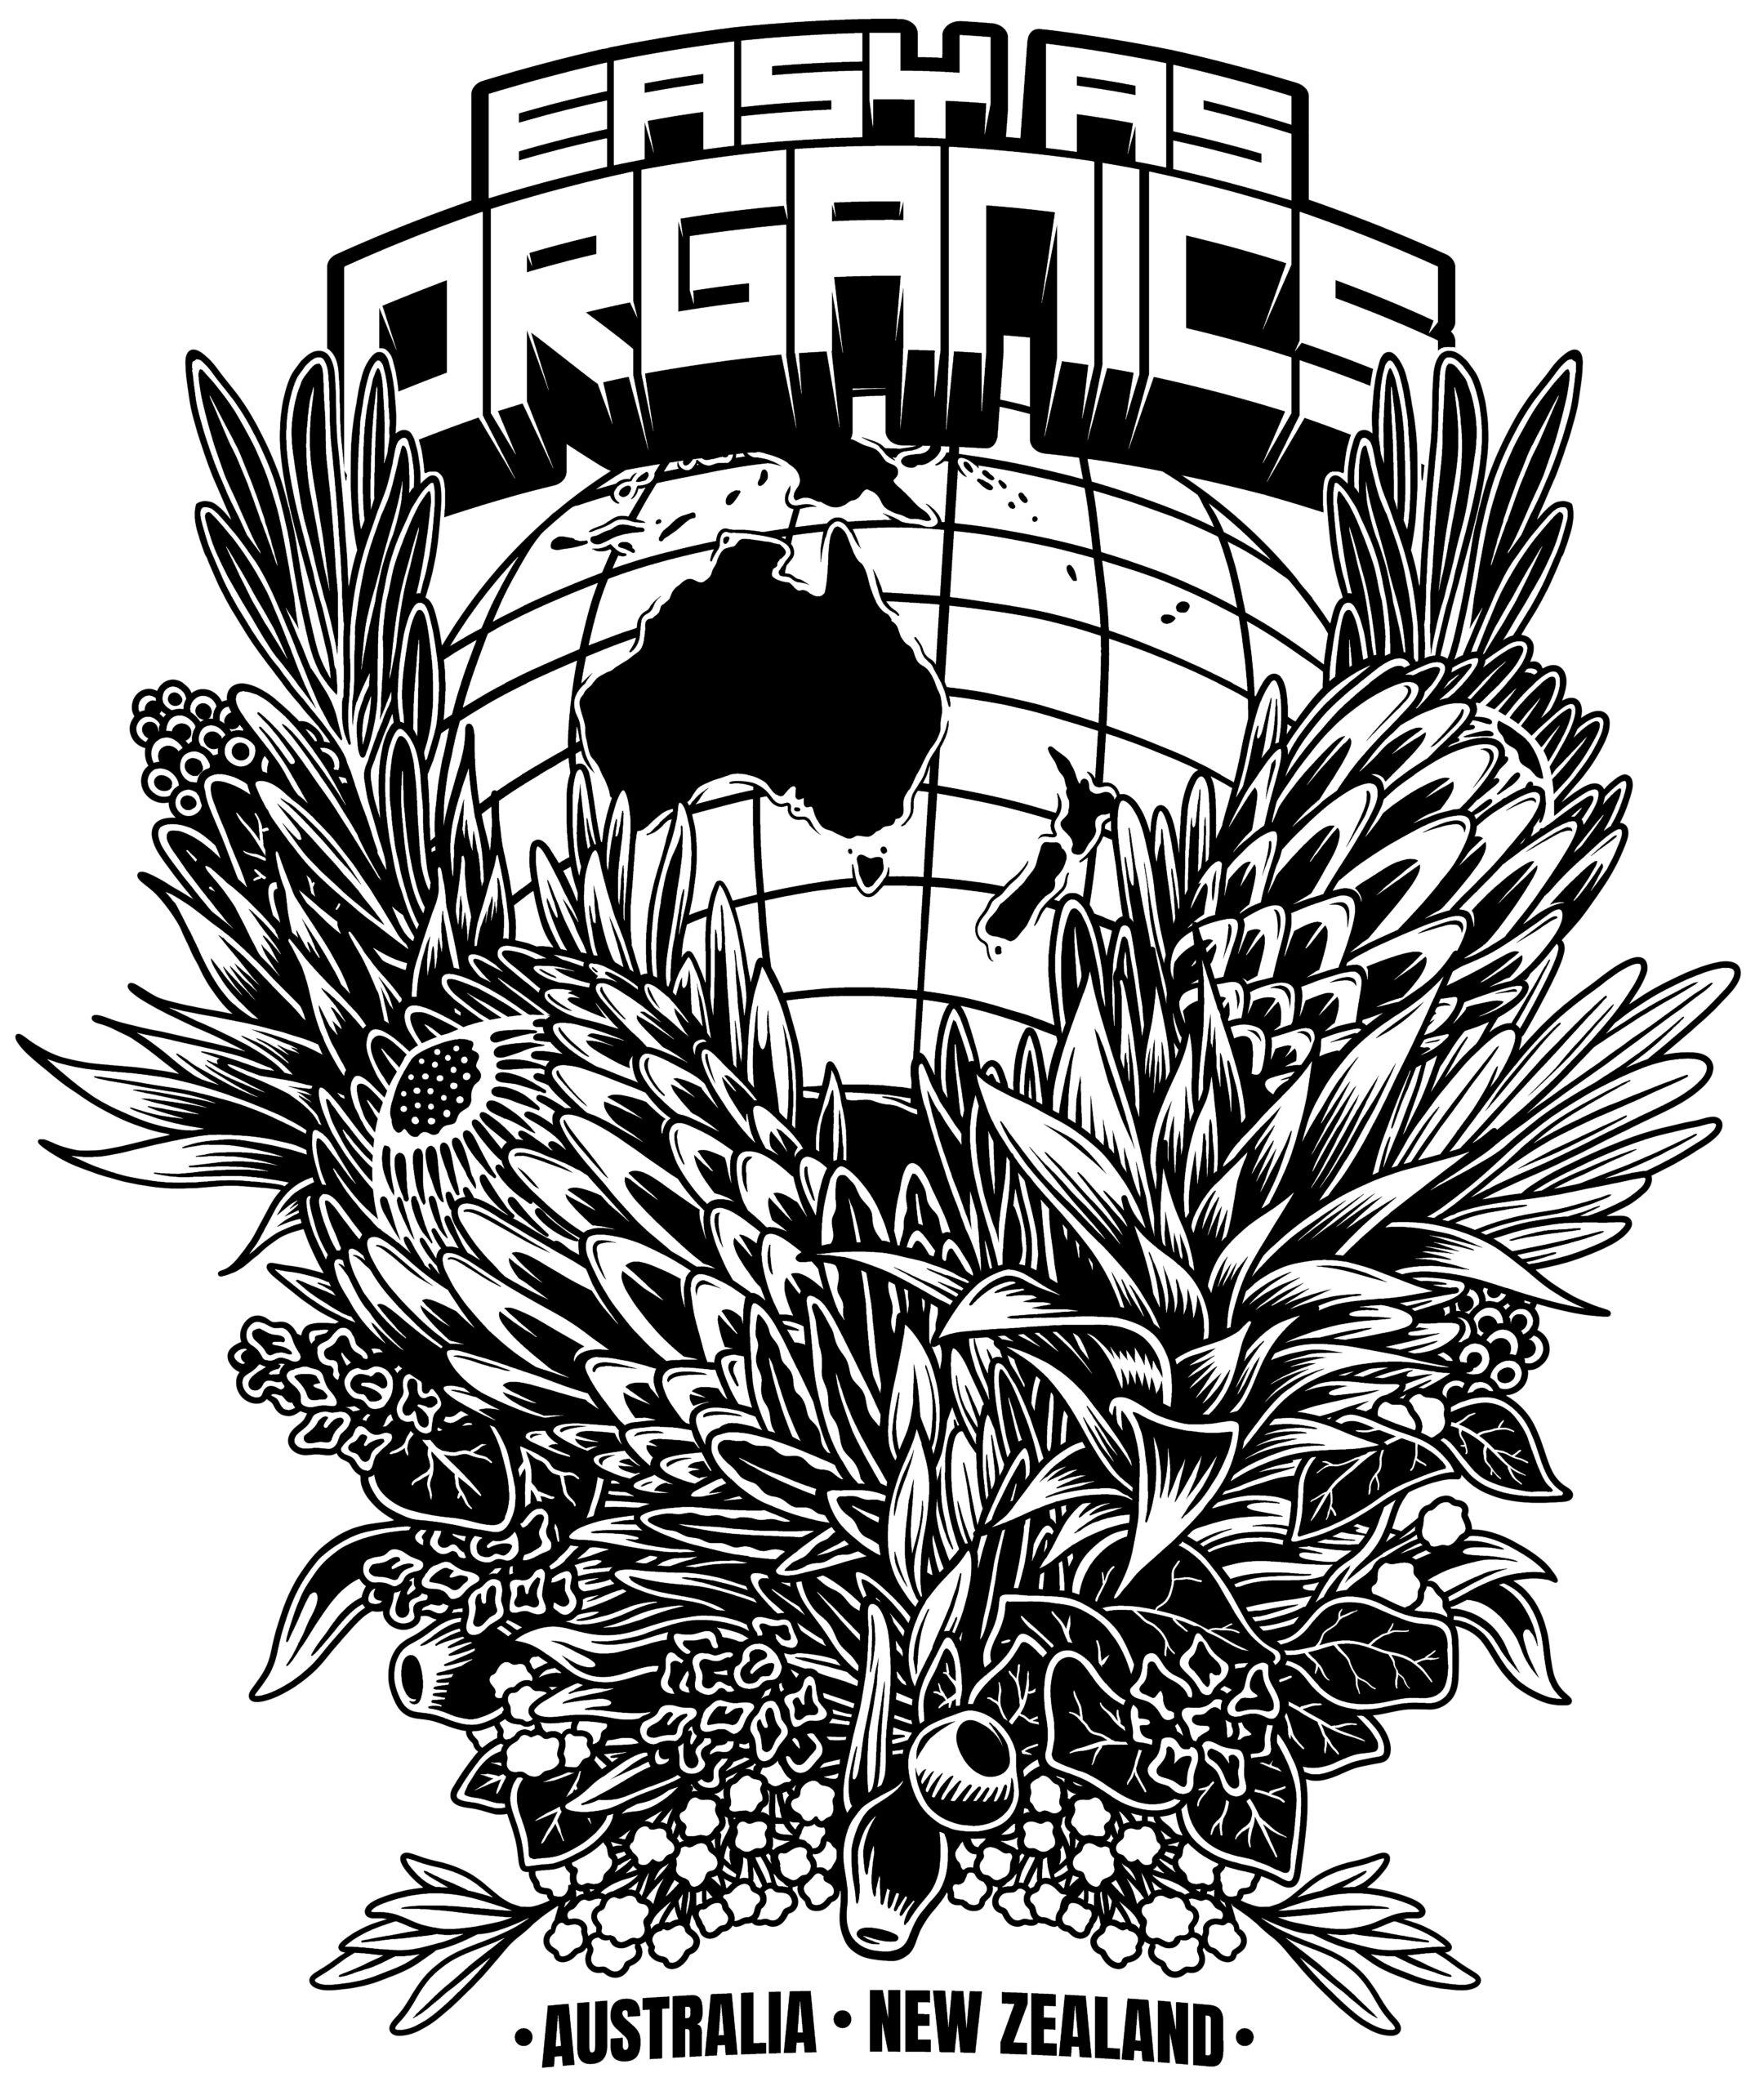 Easy as organics native plant artwork